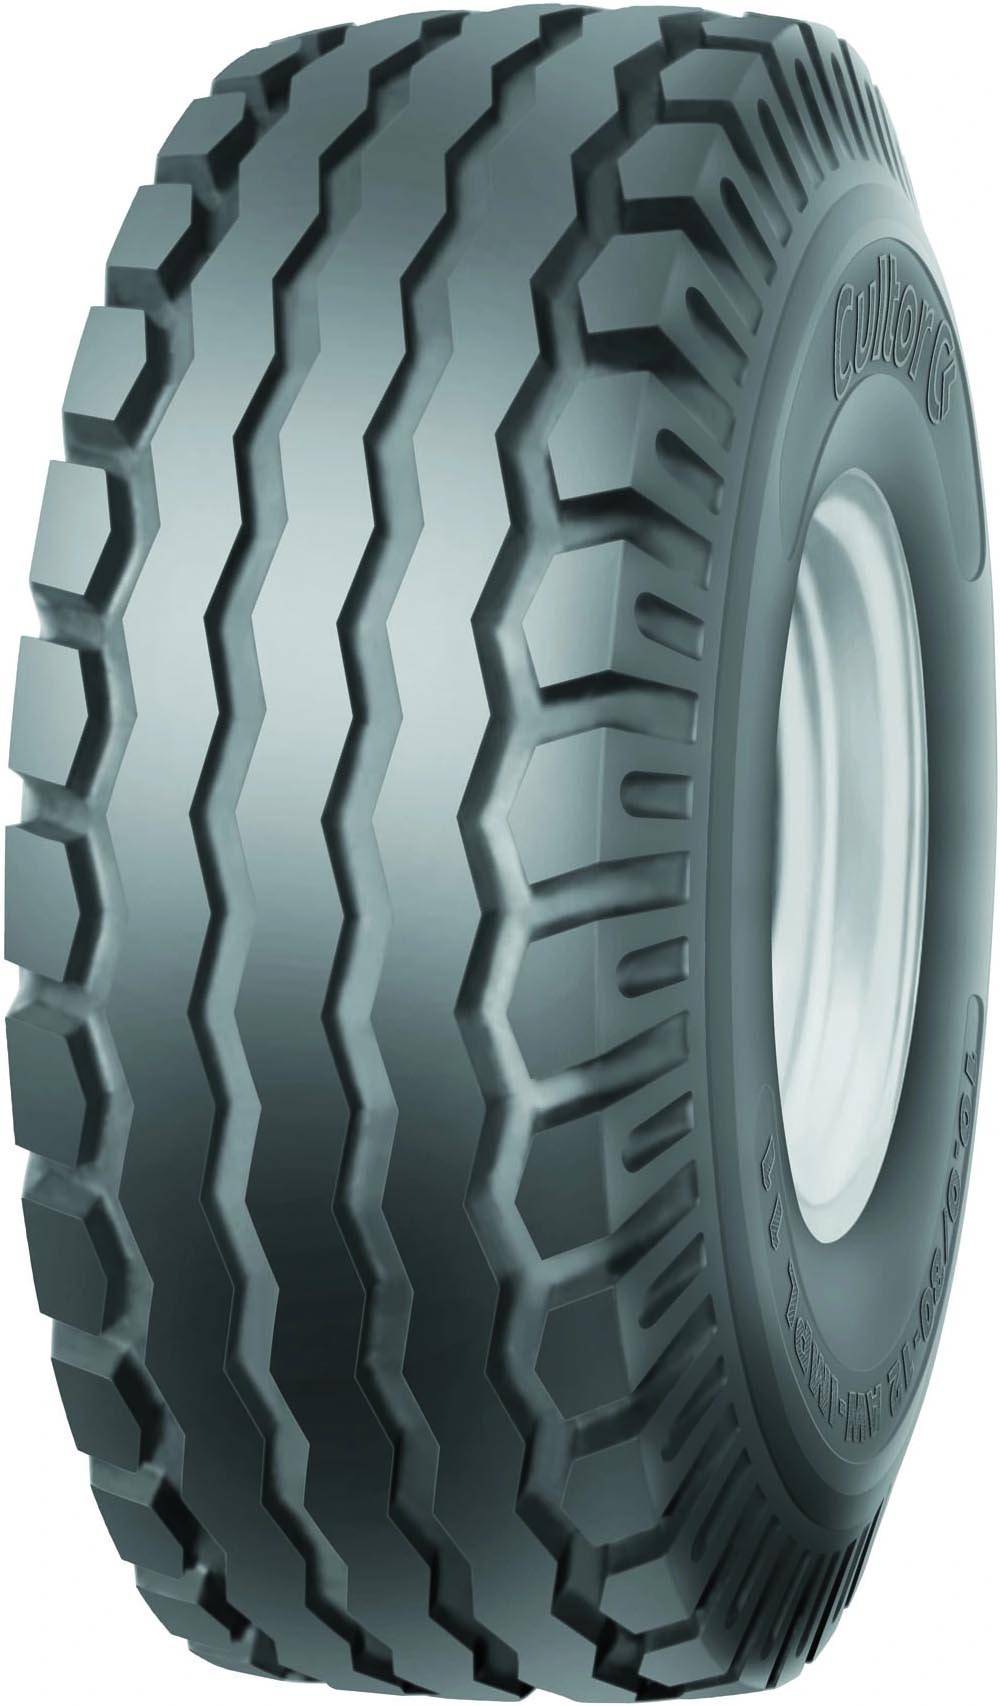 product_type-industrial_tires CULTOR AW-Impl 11 12PR TT 7.5 R16 P